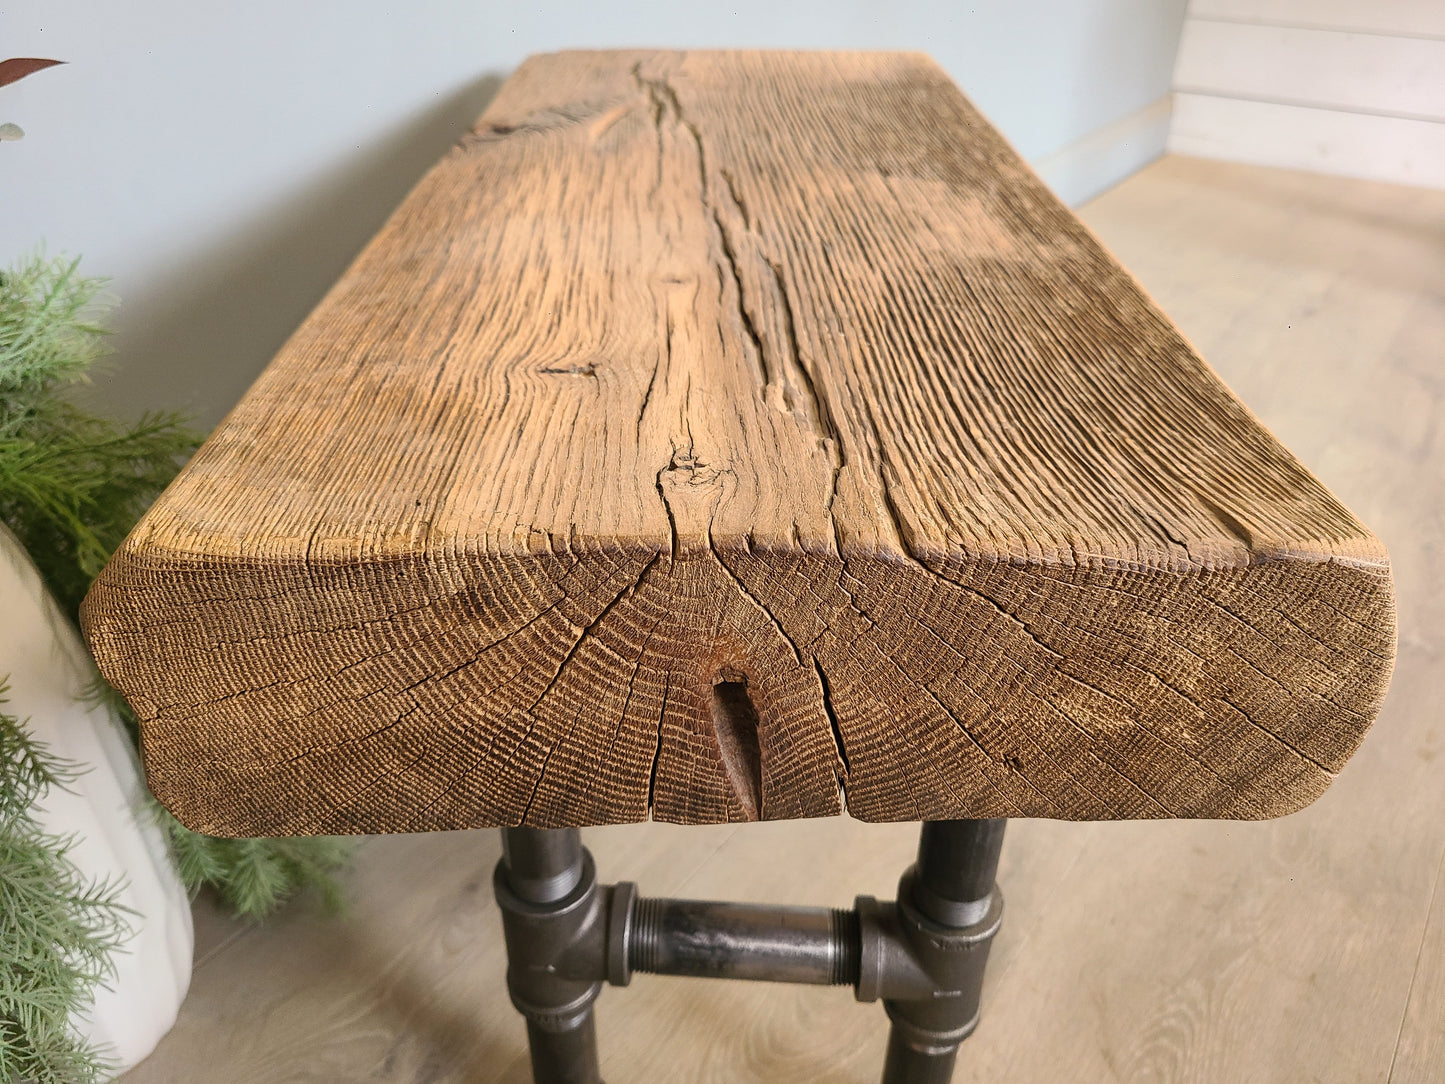 Oak Barn Beam Bench, 30", Reclaimed Wood Coffee Table D